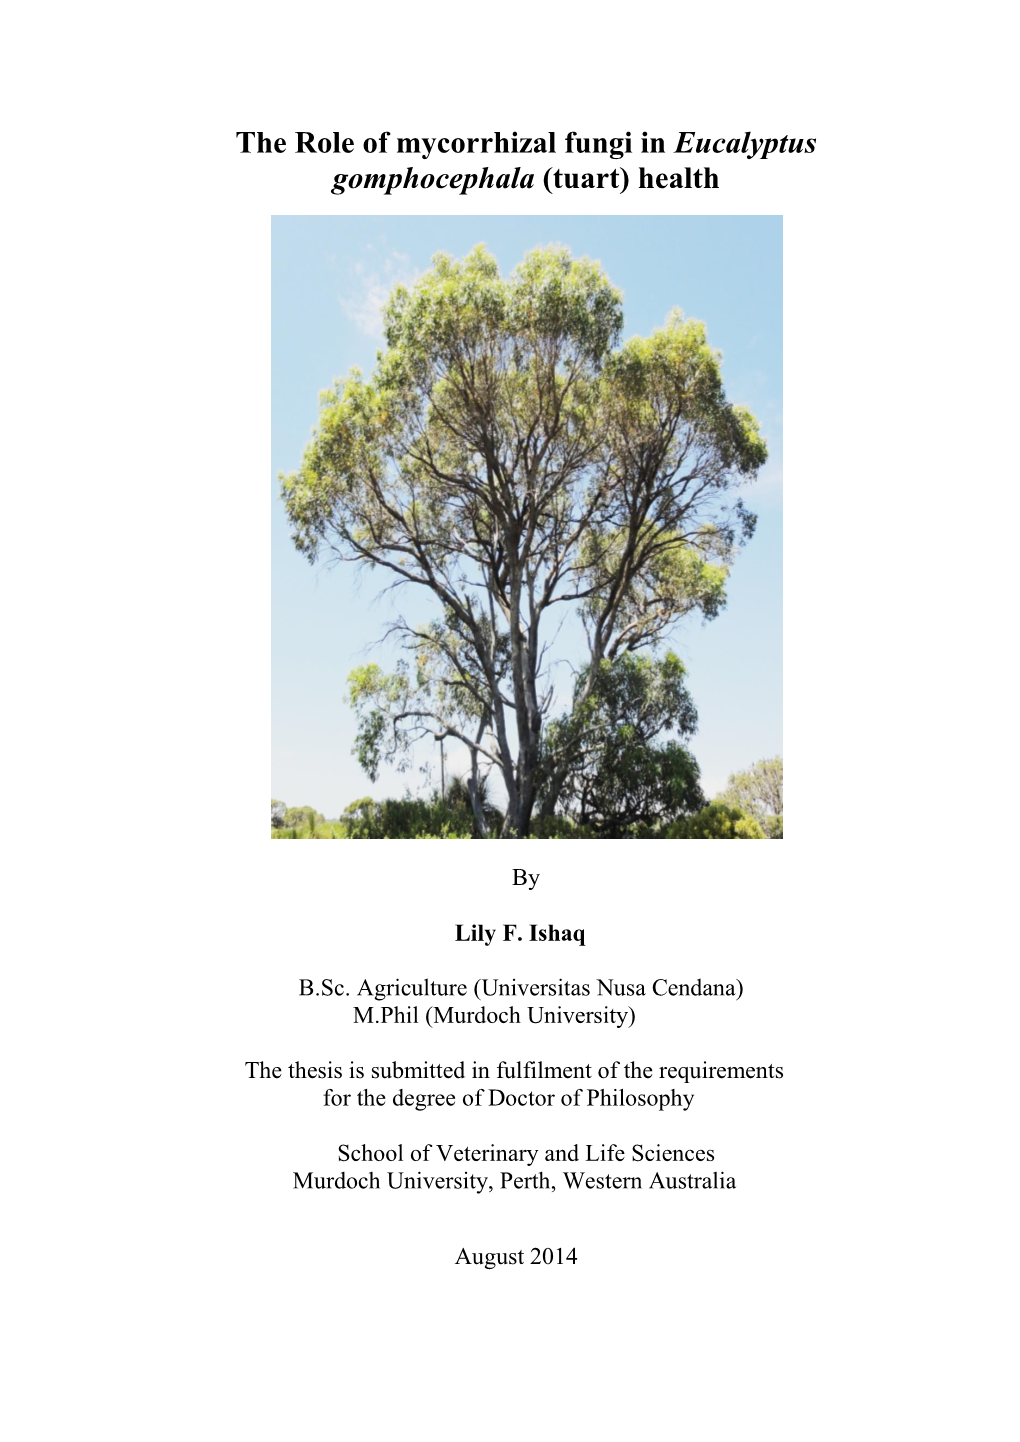 The Role of Mycorrhizal Fungi in Eucalyptus Gomphocephala (Tuart) Health